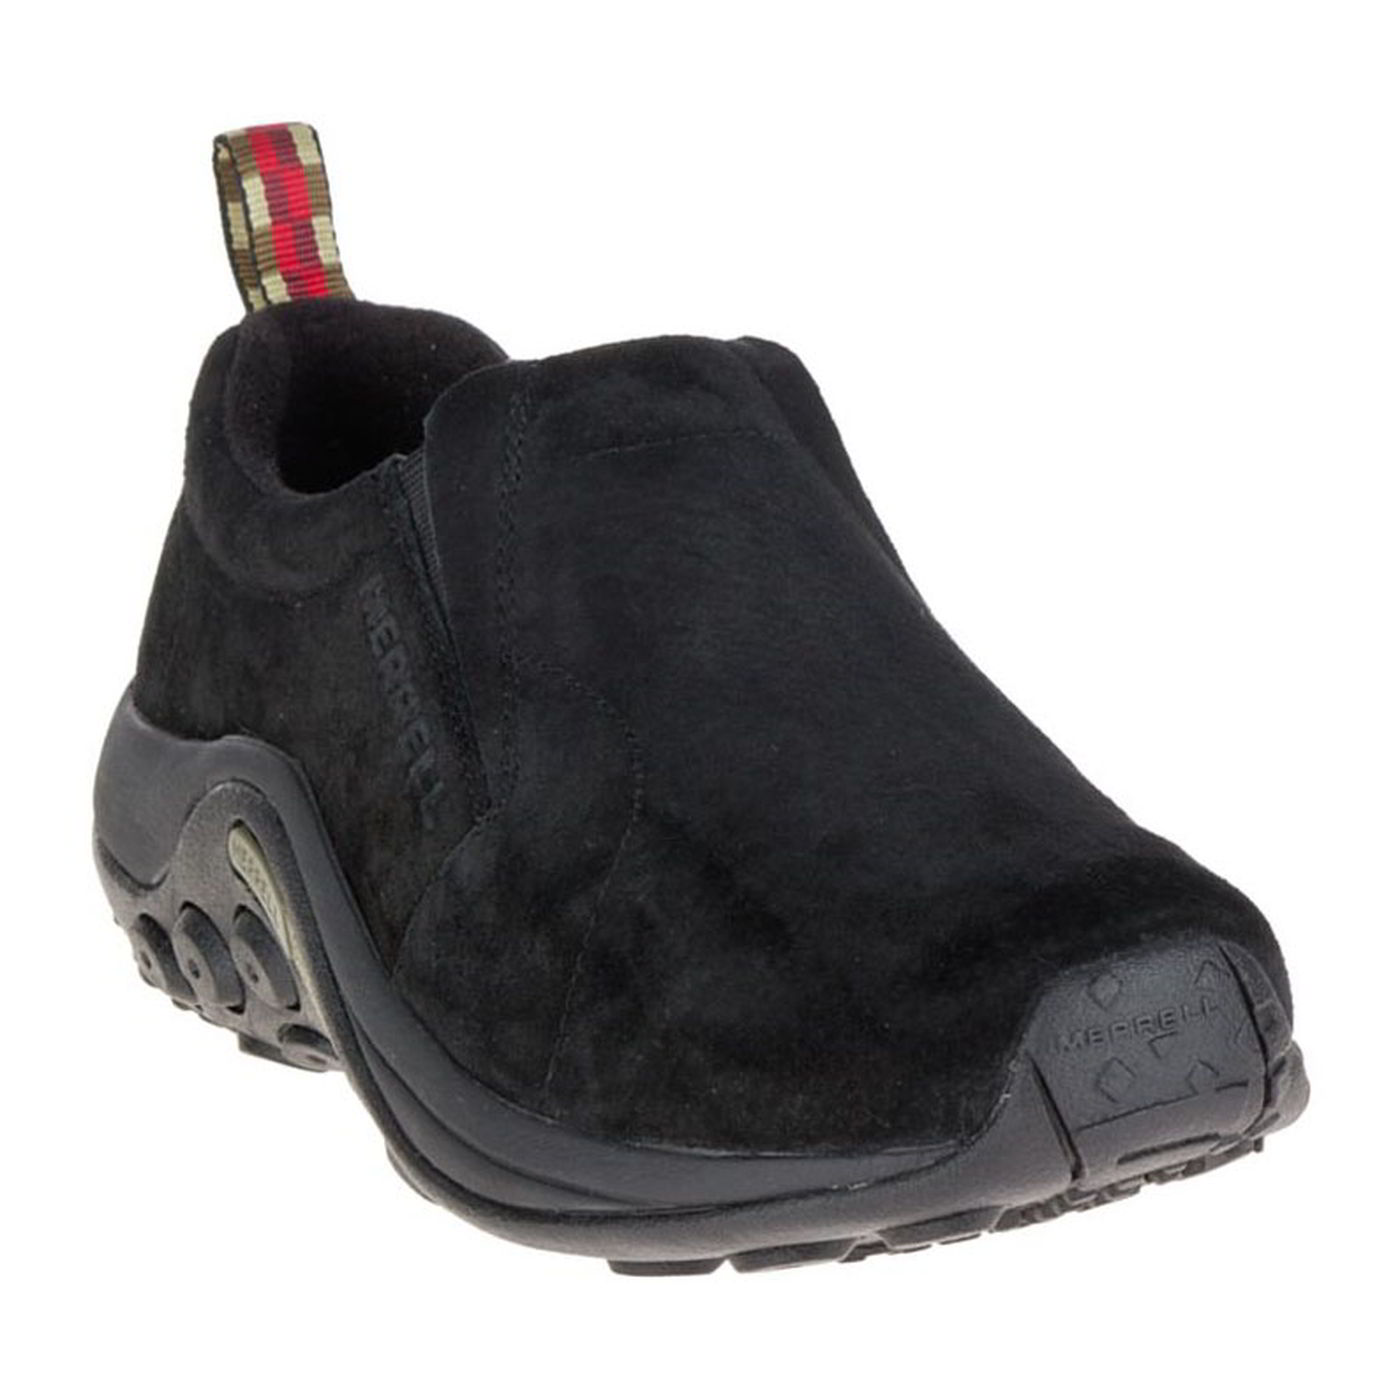 Merrell Mens Jungle Moc Leather Slip On Walking Shoes - UK 7.5